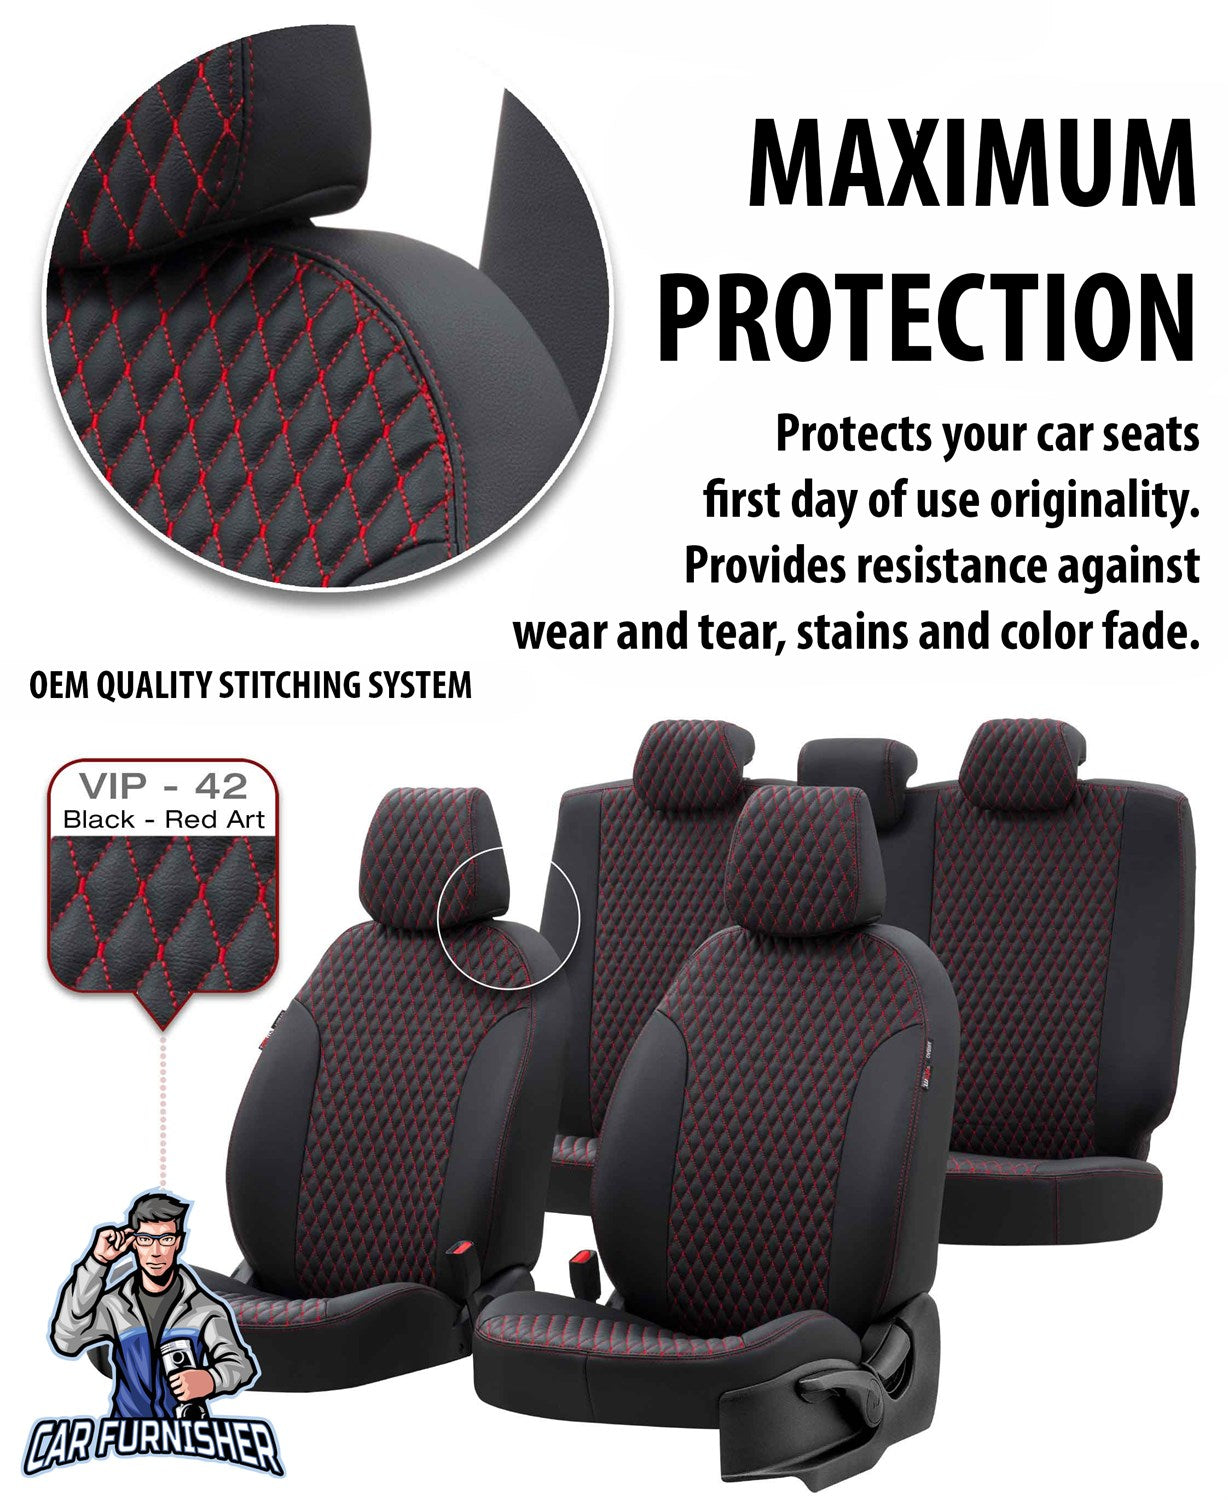 Seat Leon Car Seat Covers 1999-2023 Amsterdam Design Beige Full Set (5 Seats + Handrest) Full Leather